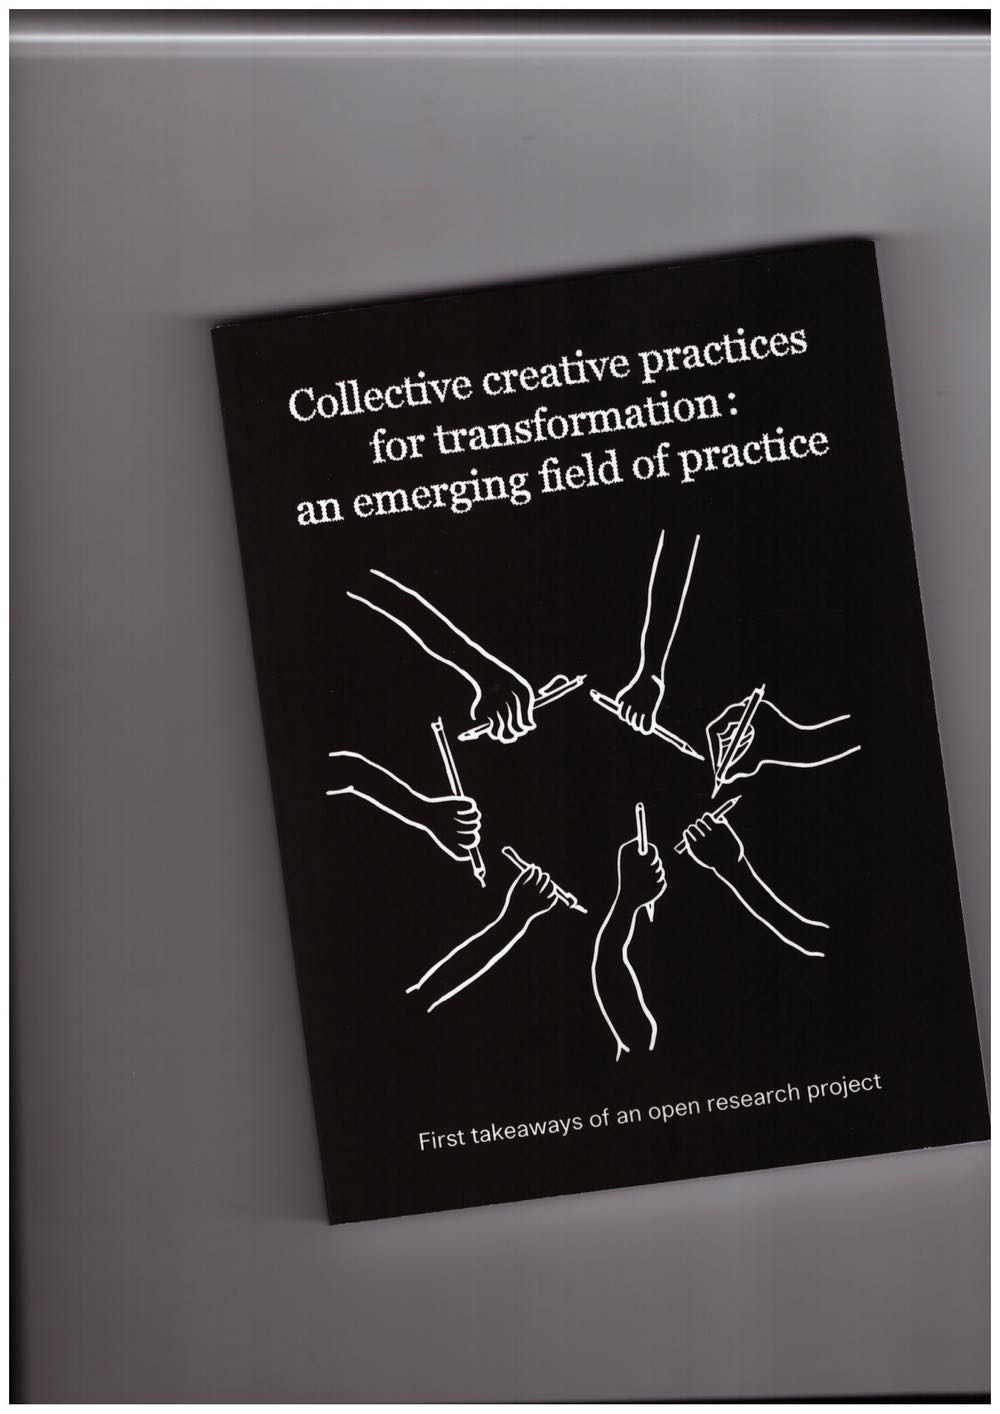 GROSSMAN, Juliette; KAPLAN, Daniel; LUCHS, Chloé (eds.) - Collective creative practices for transformation: an emerging field of practice